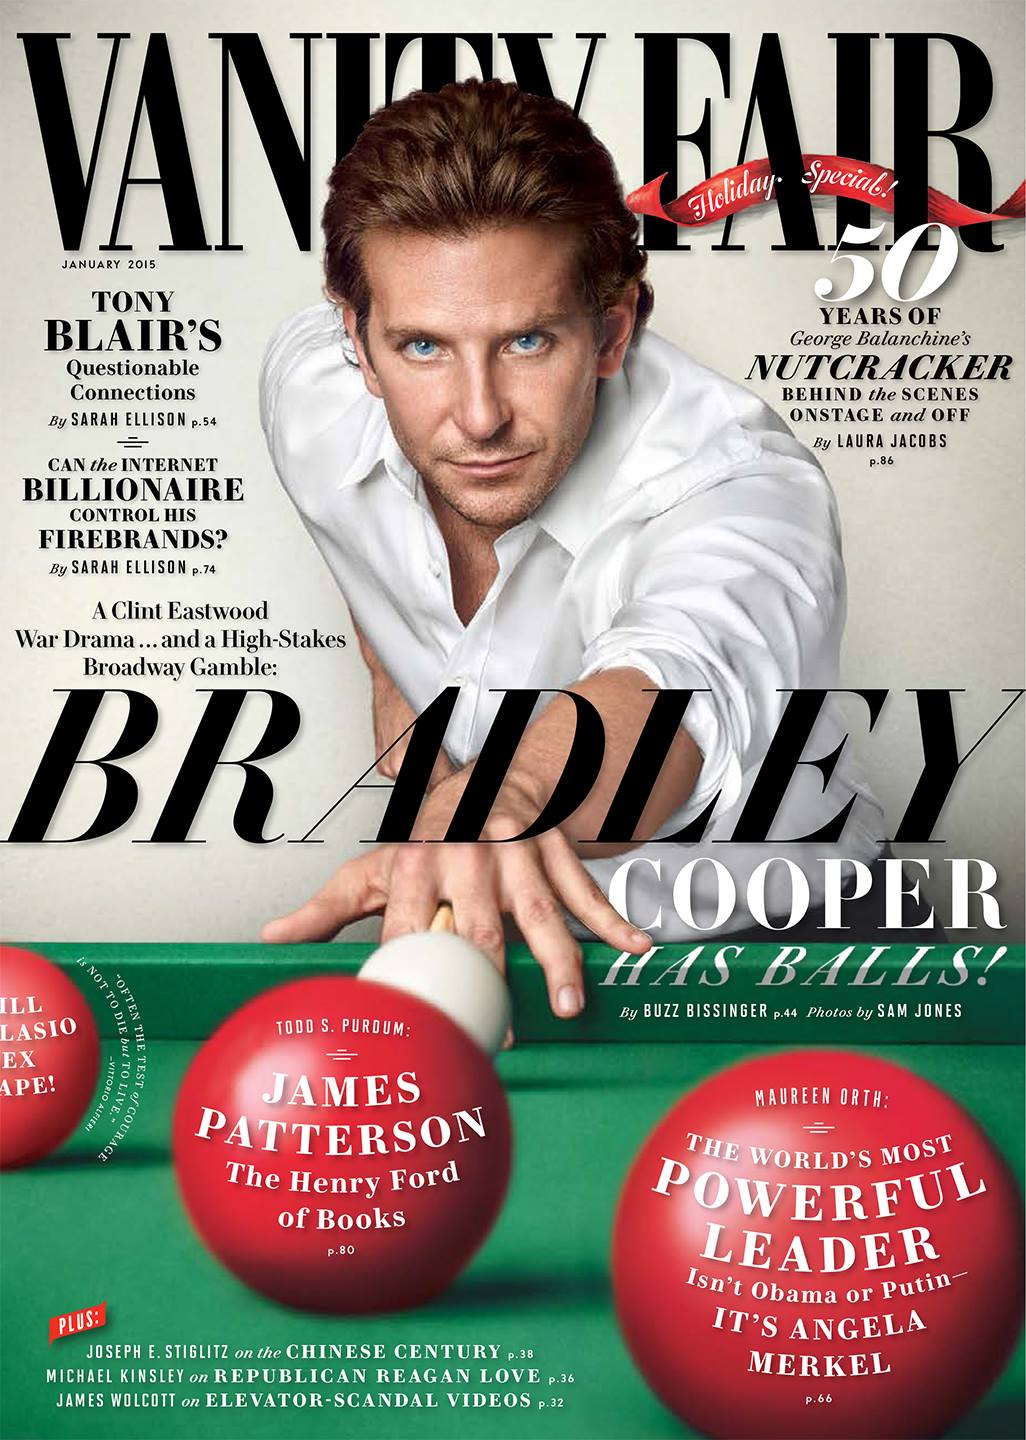 Bradley Cooper Covers Vanity Fair January 2015 Issue